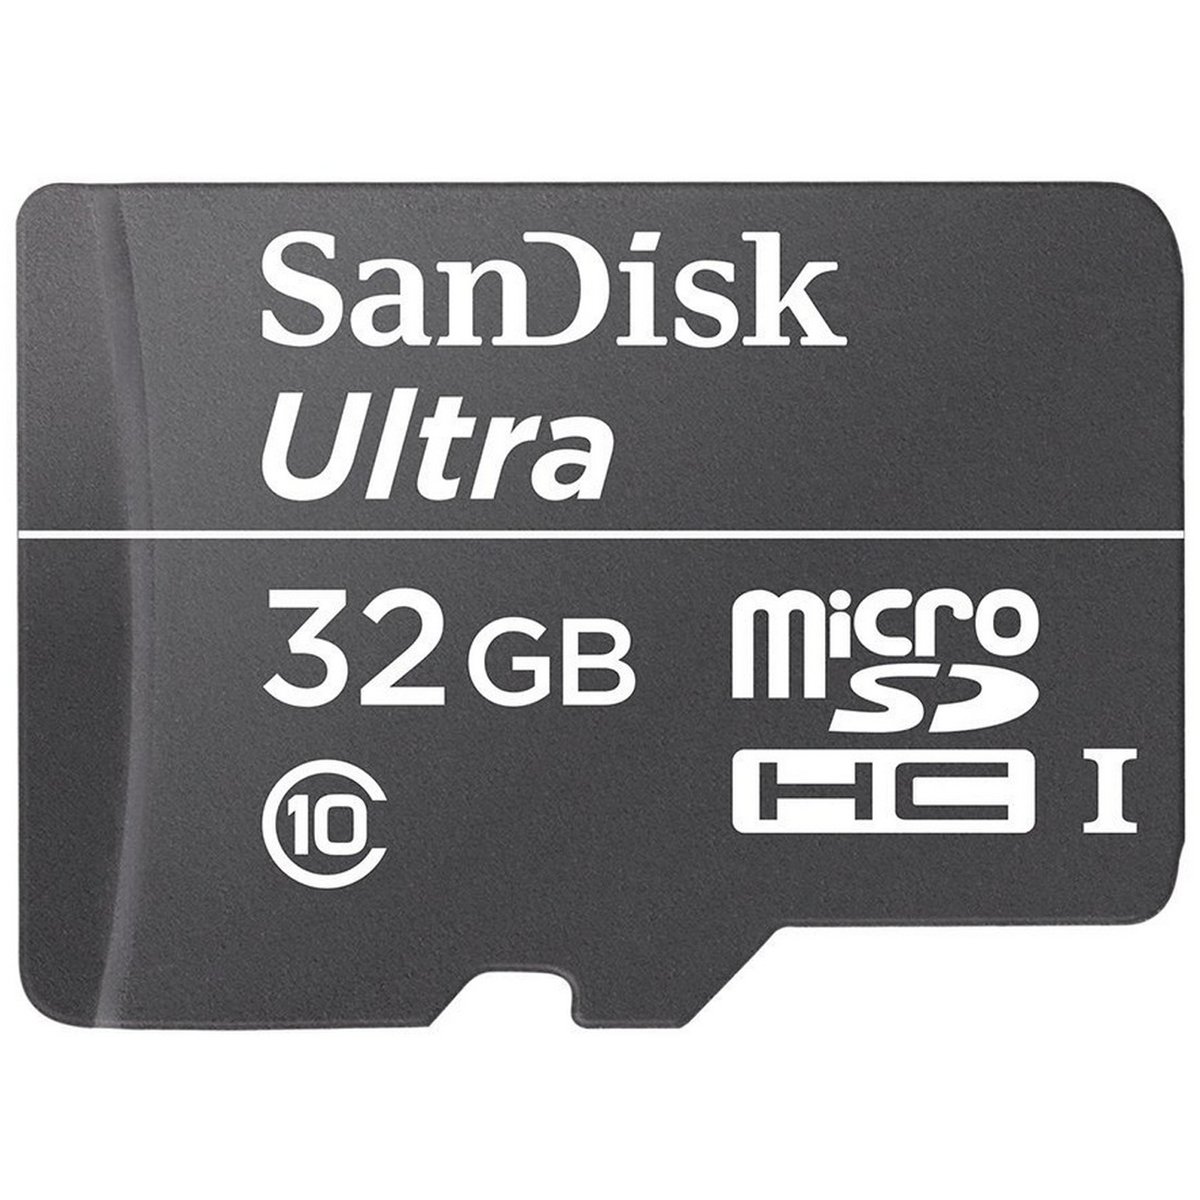 Sandisk Ultra Micro SDHC Card SDSDQL 32GB